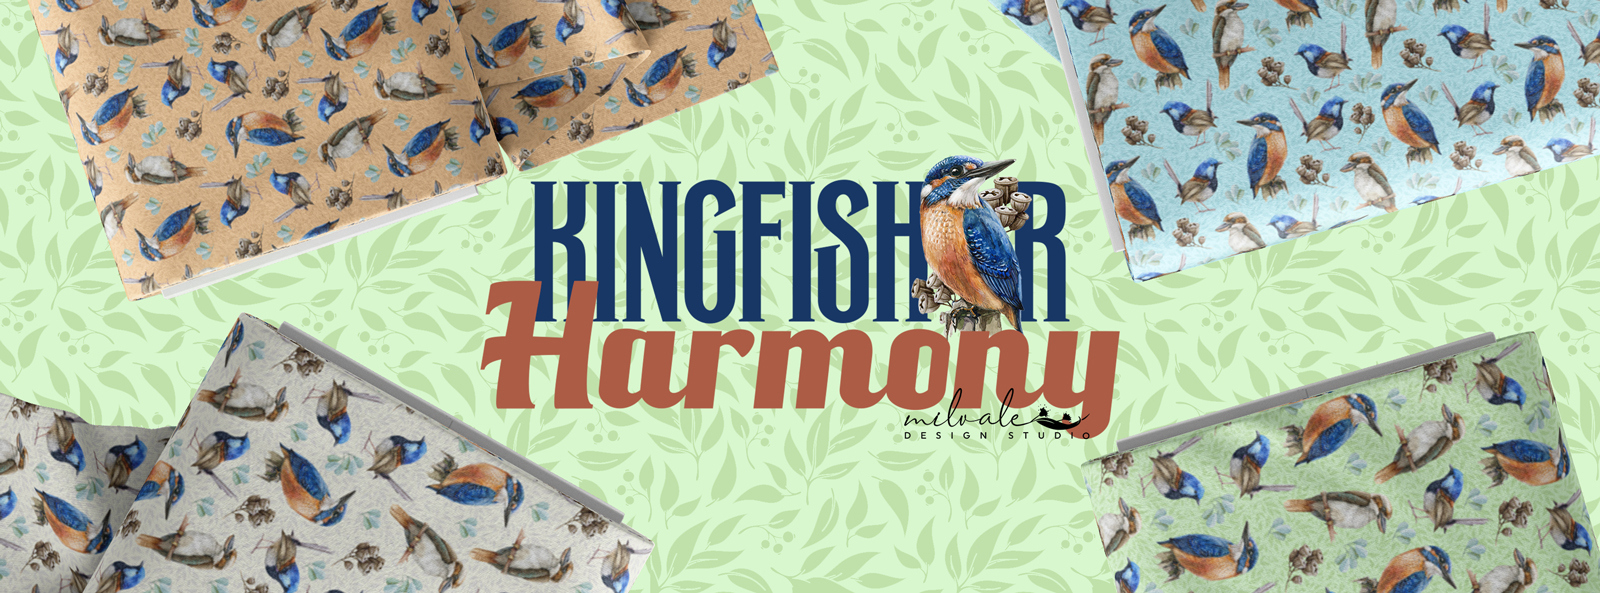 Kingfisher Harmony - Website Banner